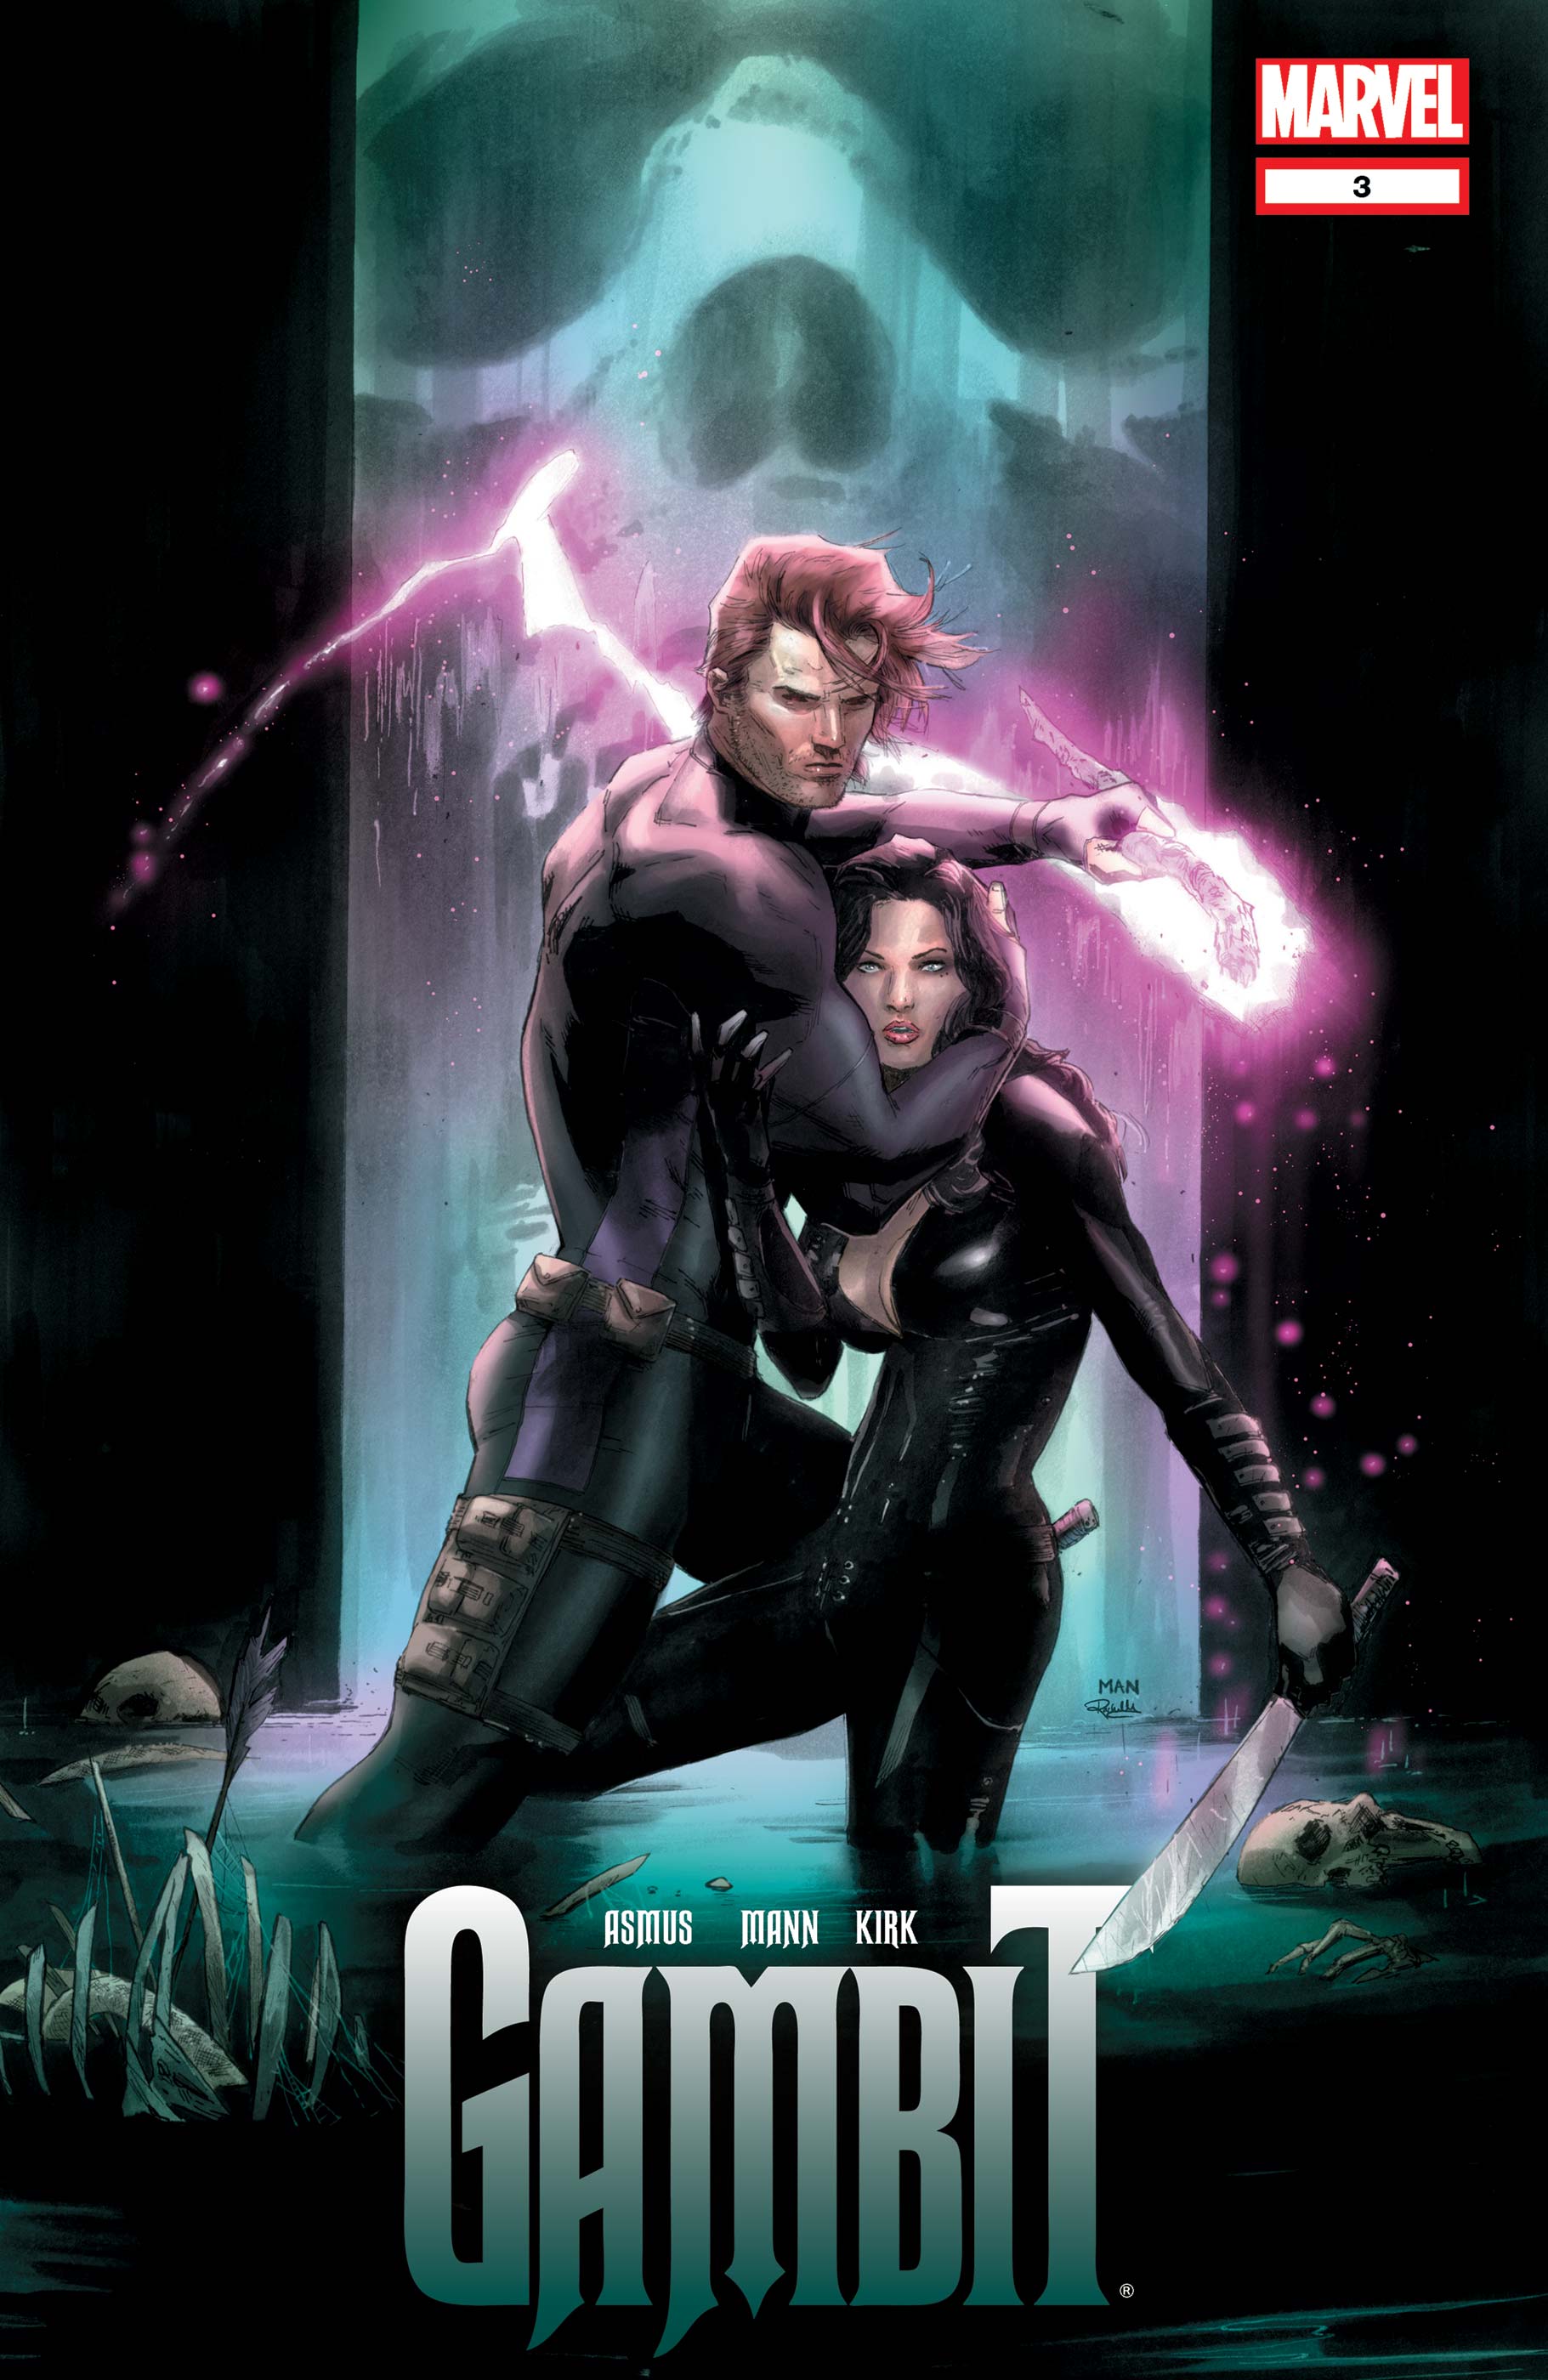 Gambit (2012) #3